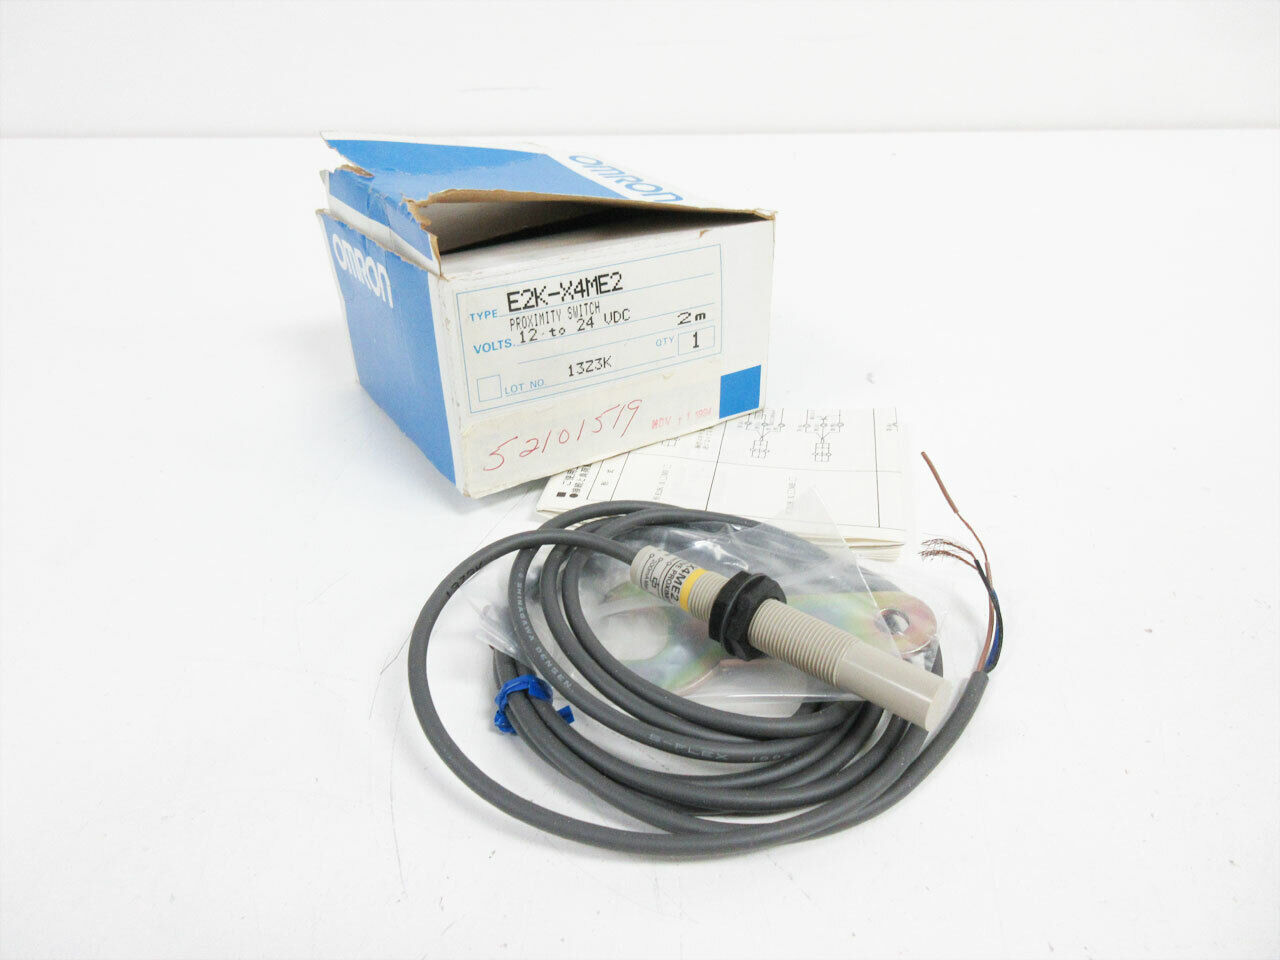 Omron E2k-x4me2 Capacitive Proximity Sensor 0.157" Ip66 Cylinder Threaded - M12